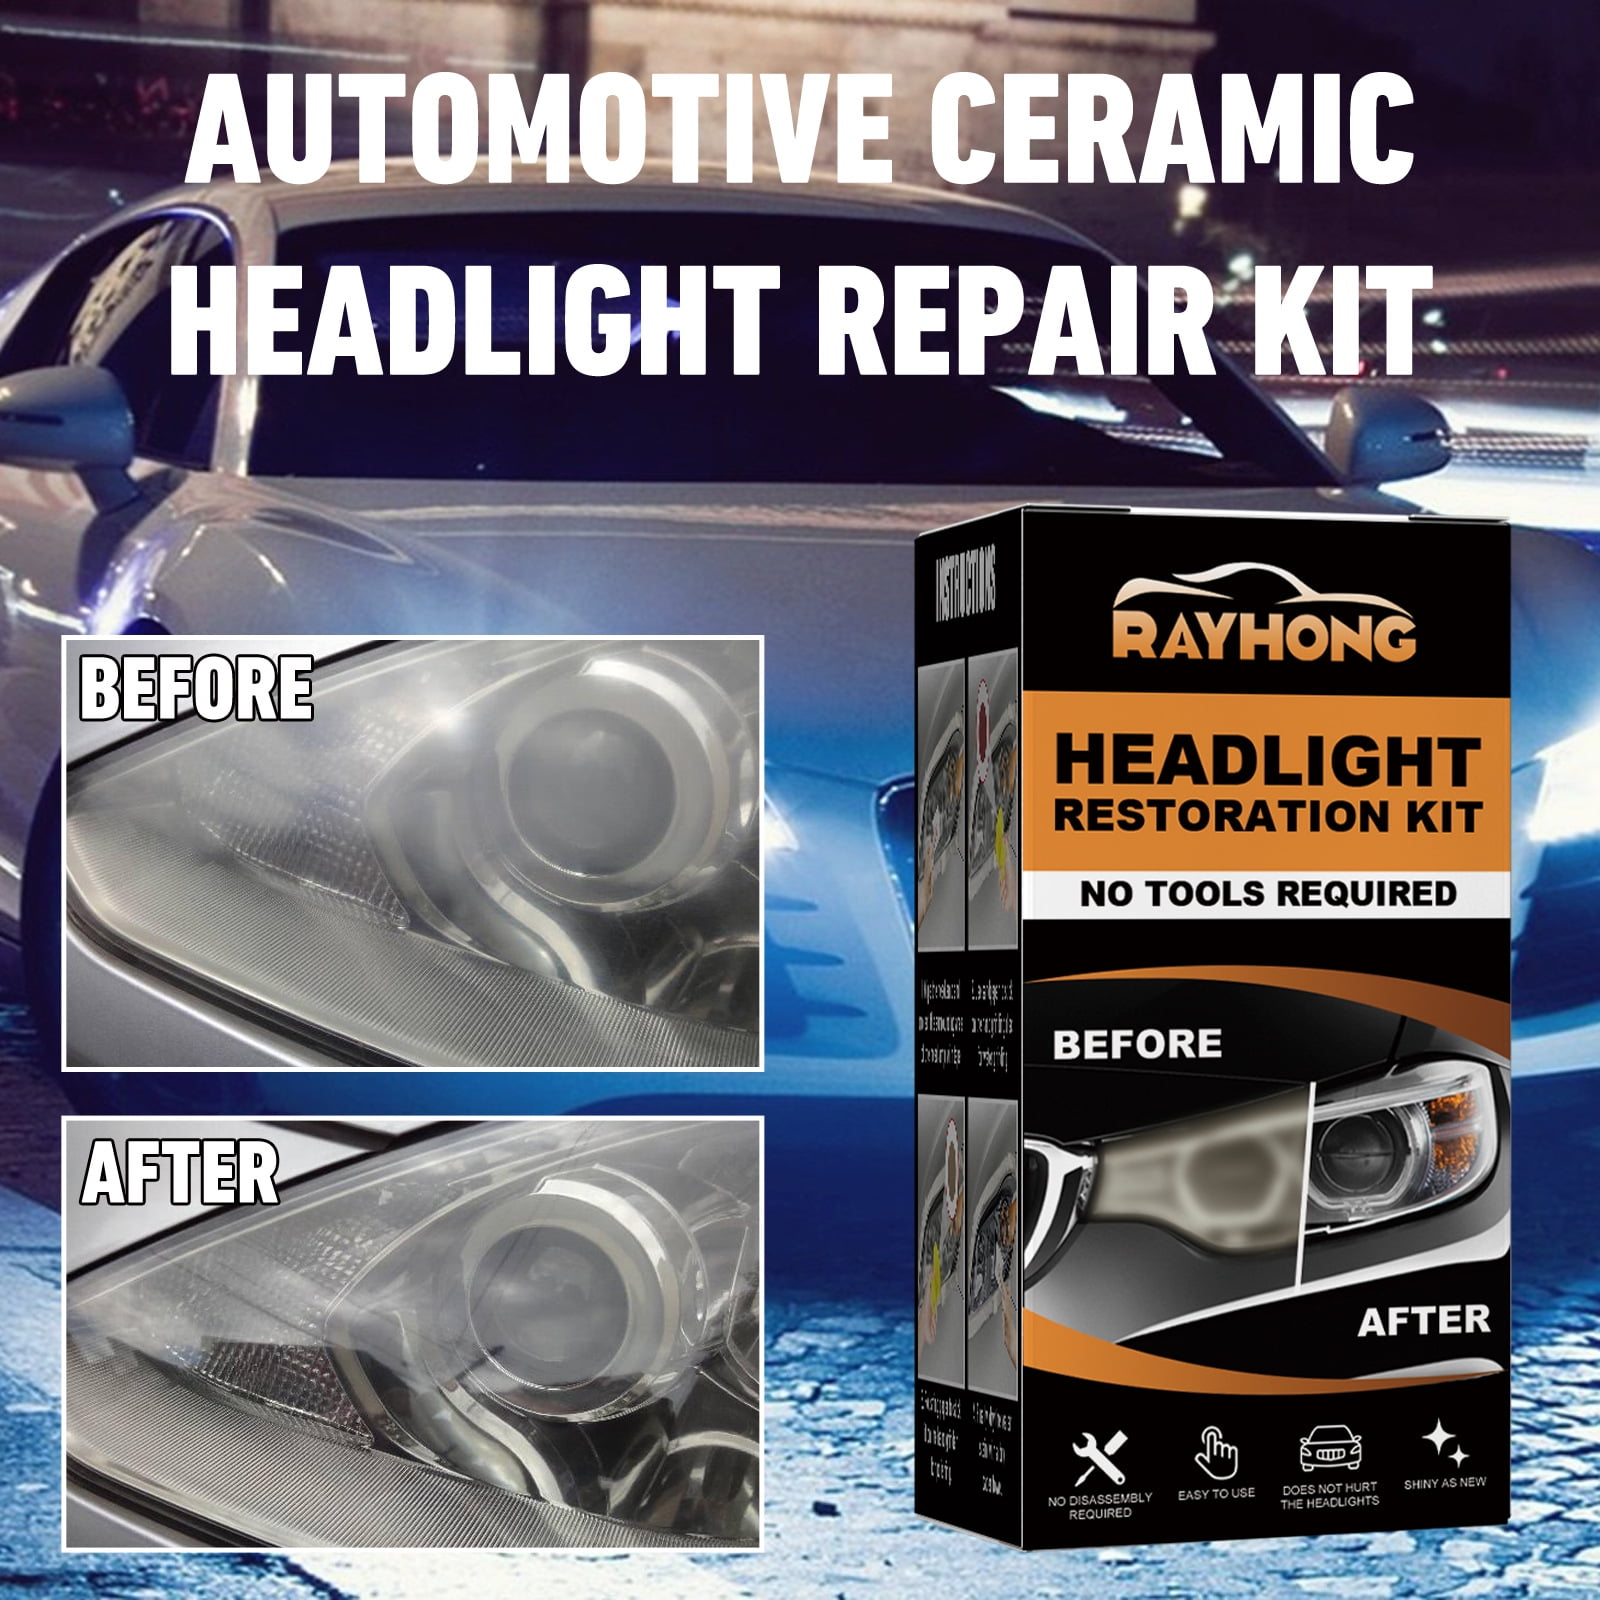 Headlight restoration kits compared - Video - CNET